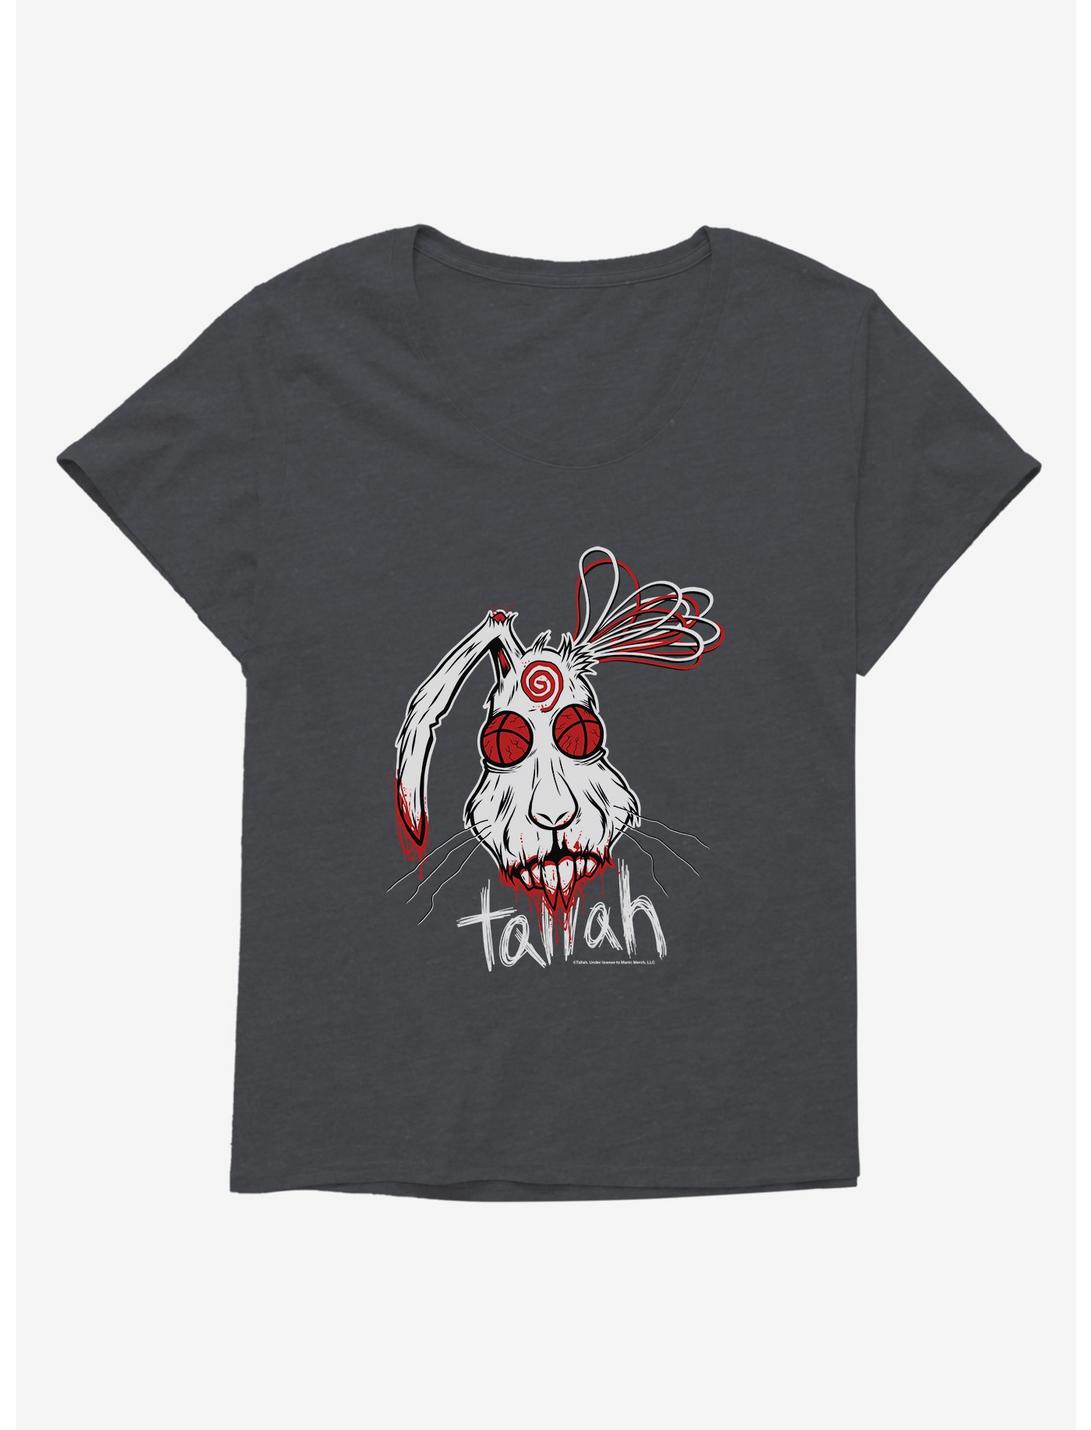 Tallah Dead Rabbit Girls T-Shirt Plus Size, CHARCOAL HEATHER, hi-res